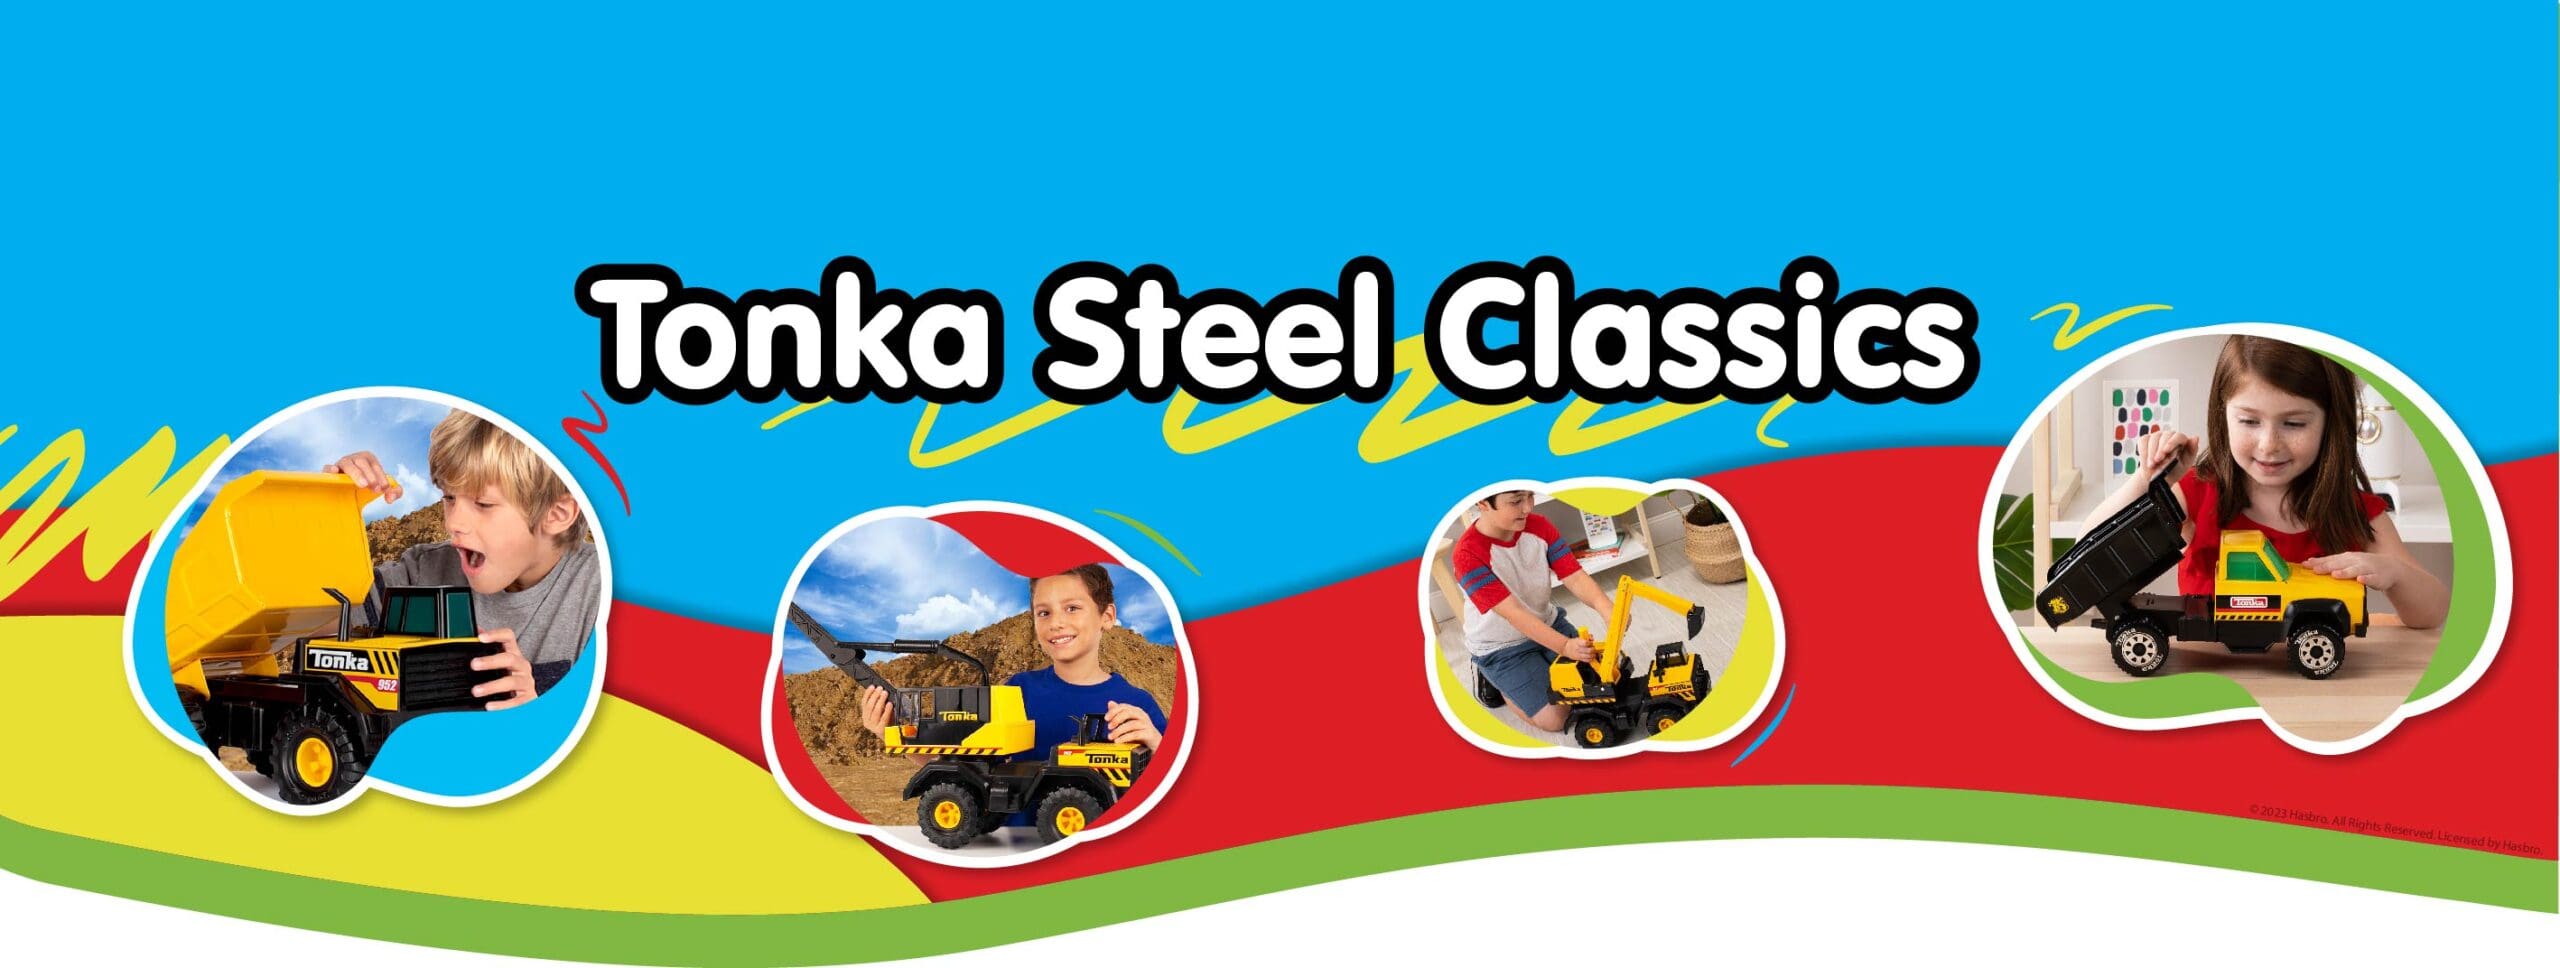 Tonka Steel classics banner